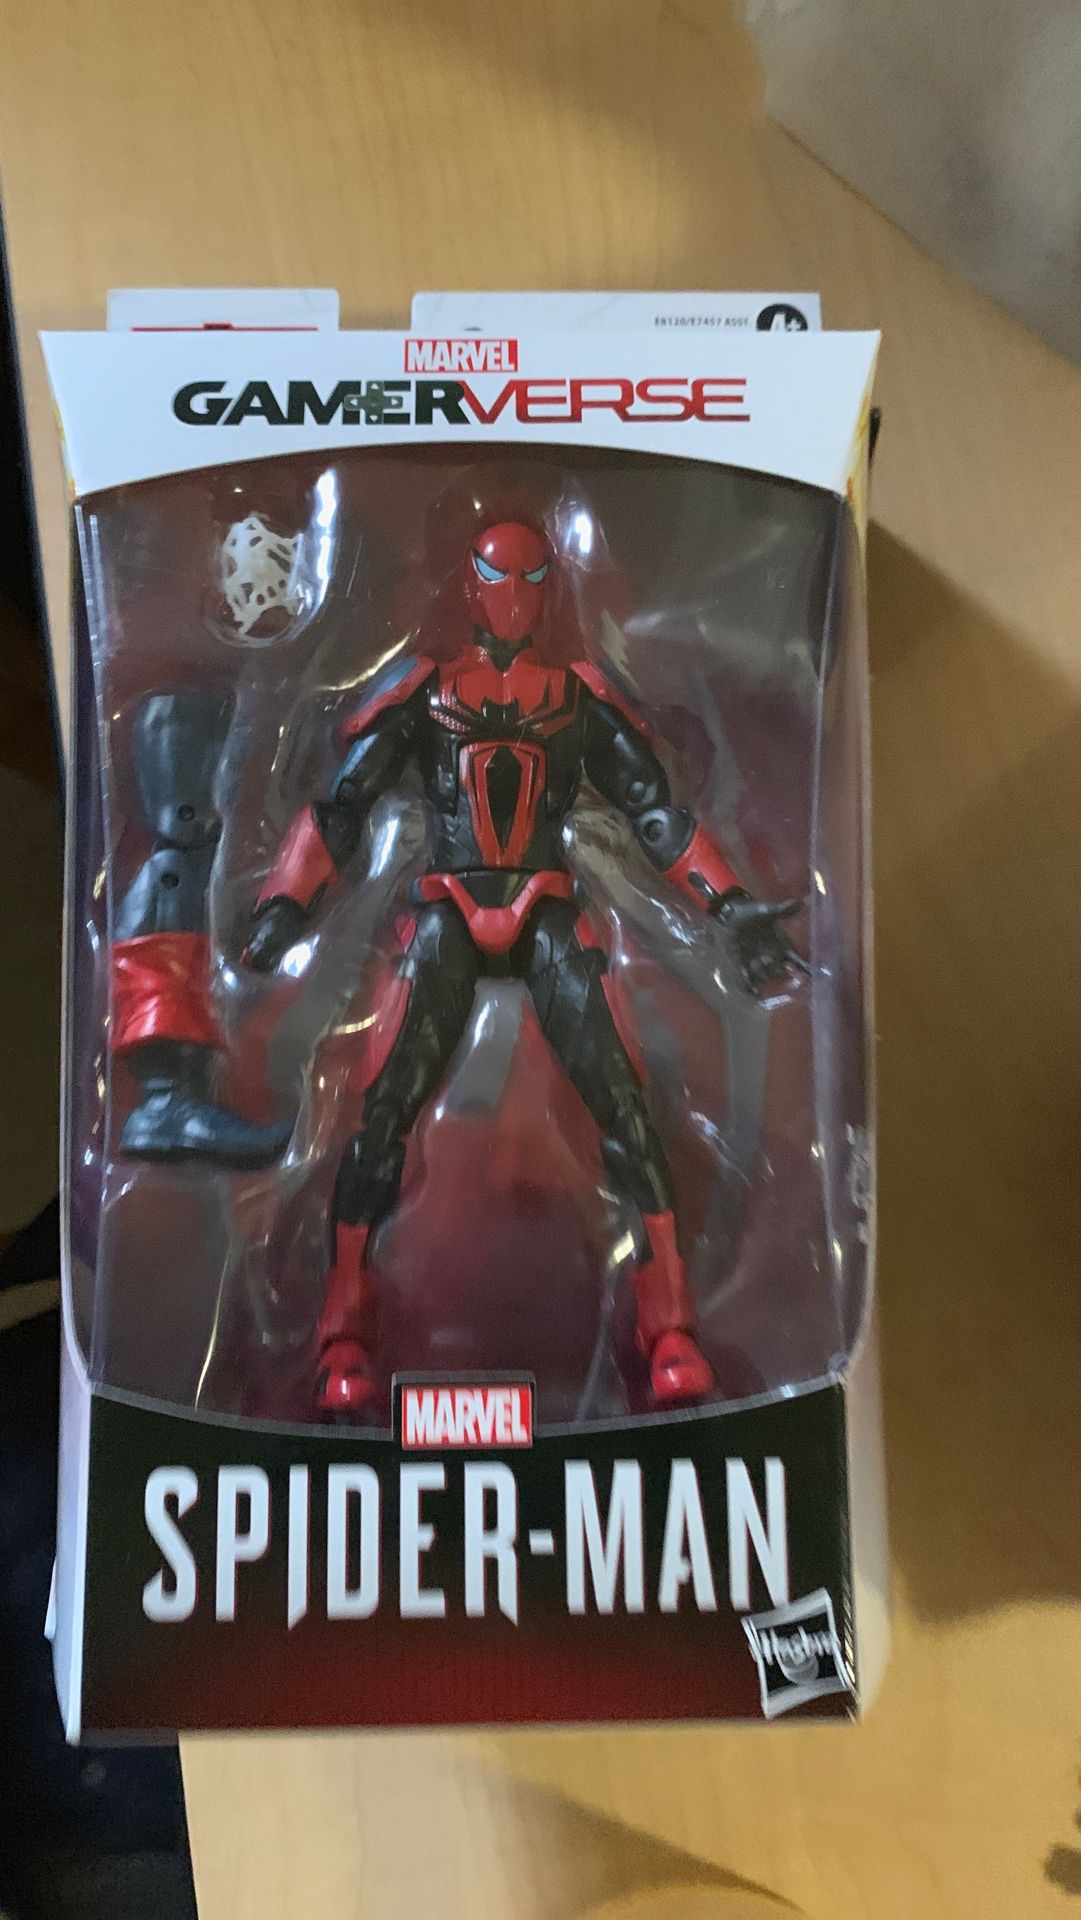 Marvel gamer verse Spider-Man action figure